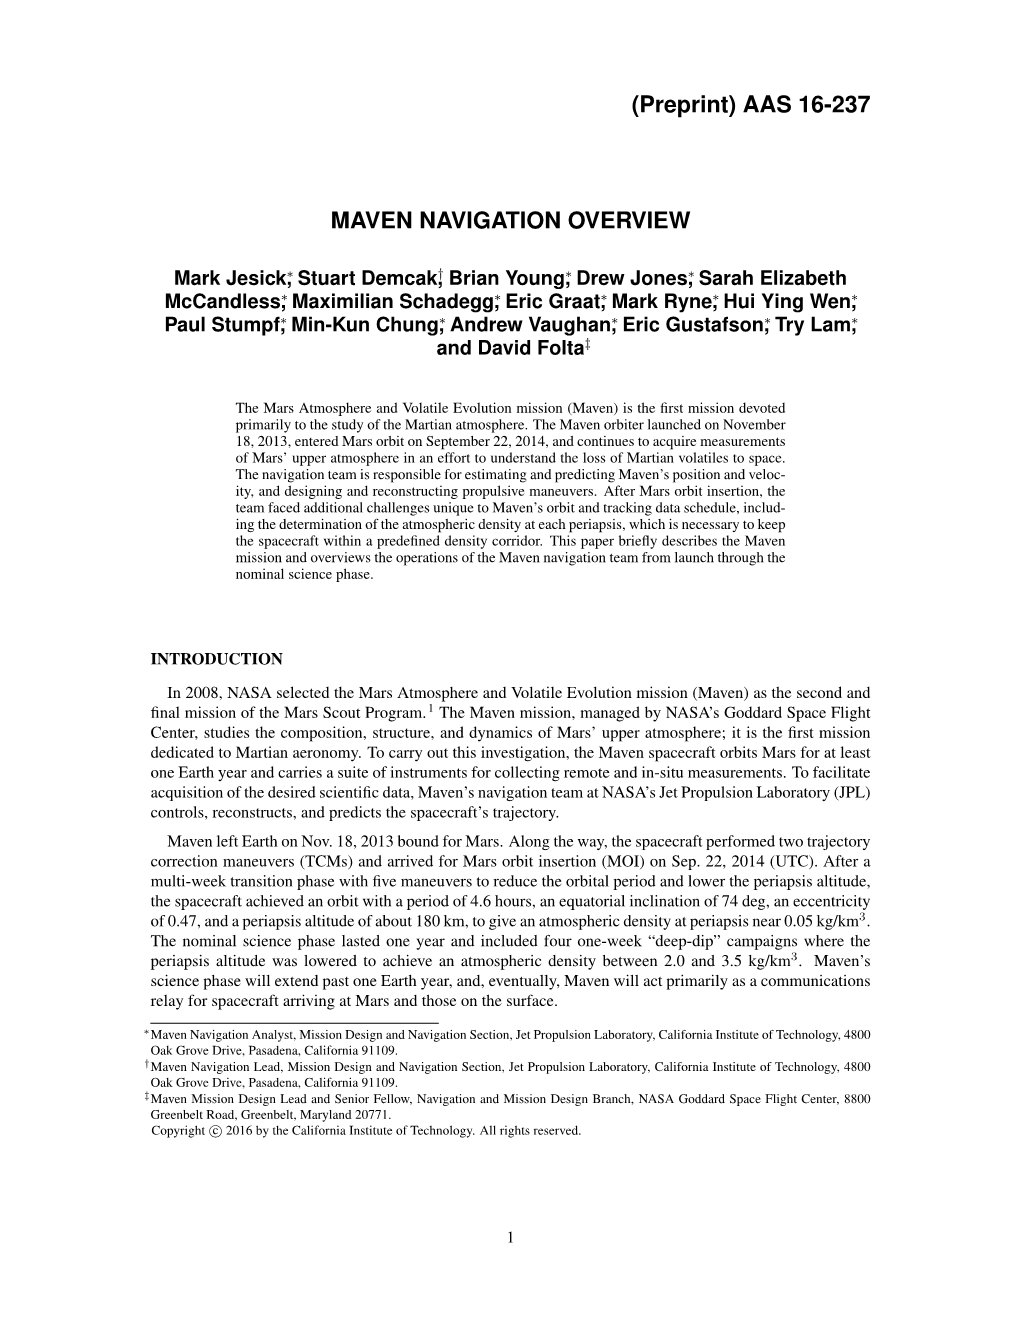 Maven Navigation Overview